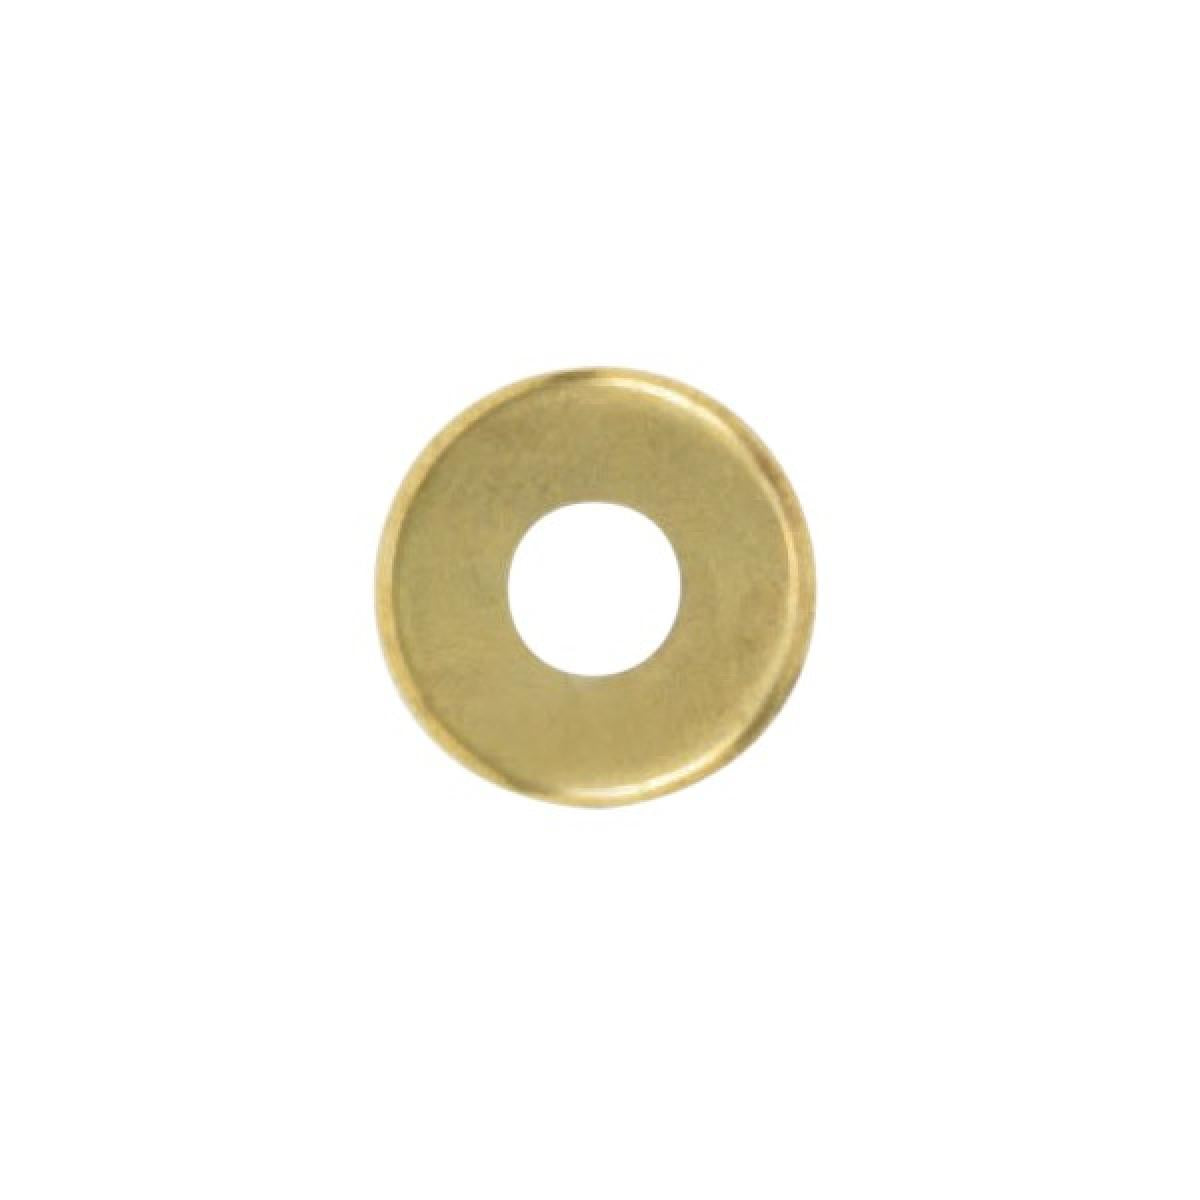 Satco 90-2061 Steel Check Ring Curled Edge 1/8 IP Slip Brass Plated Finish 1-3/8" Diameter